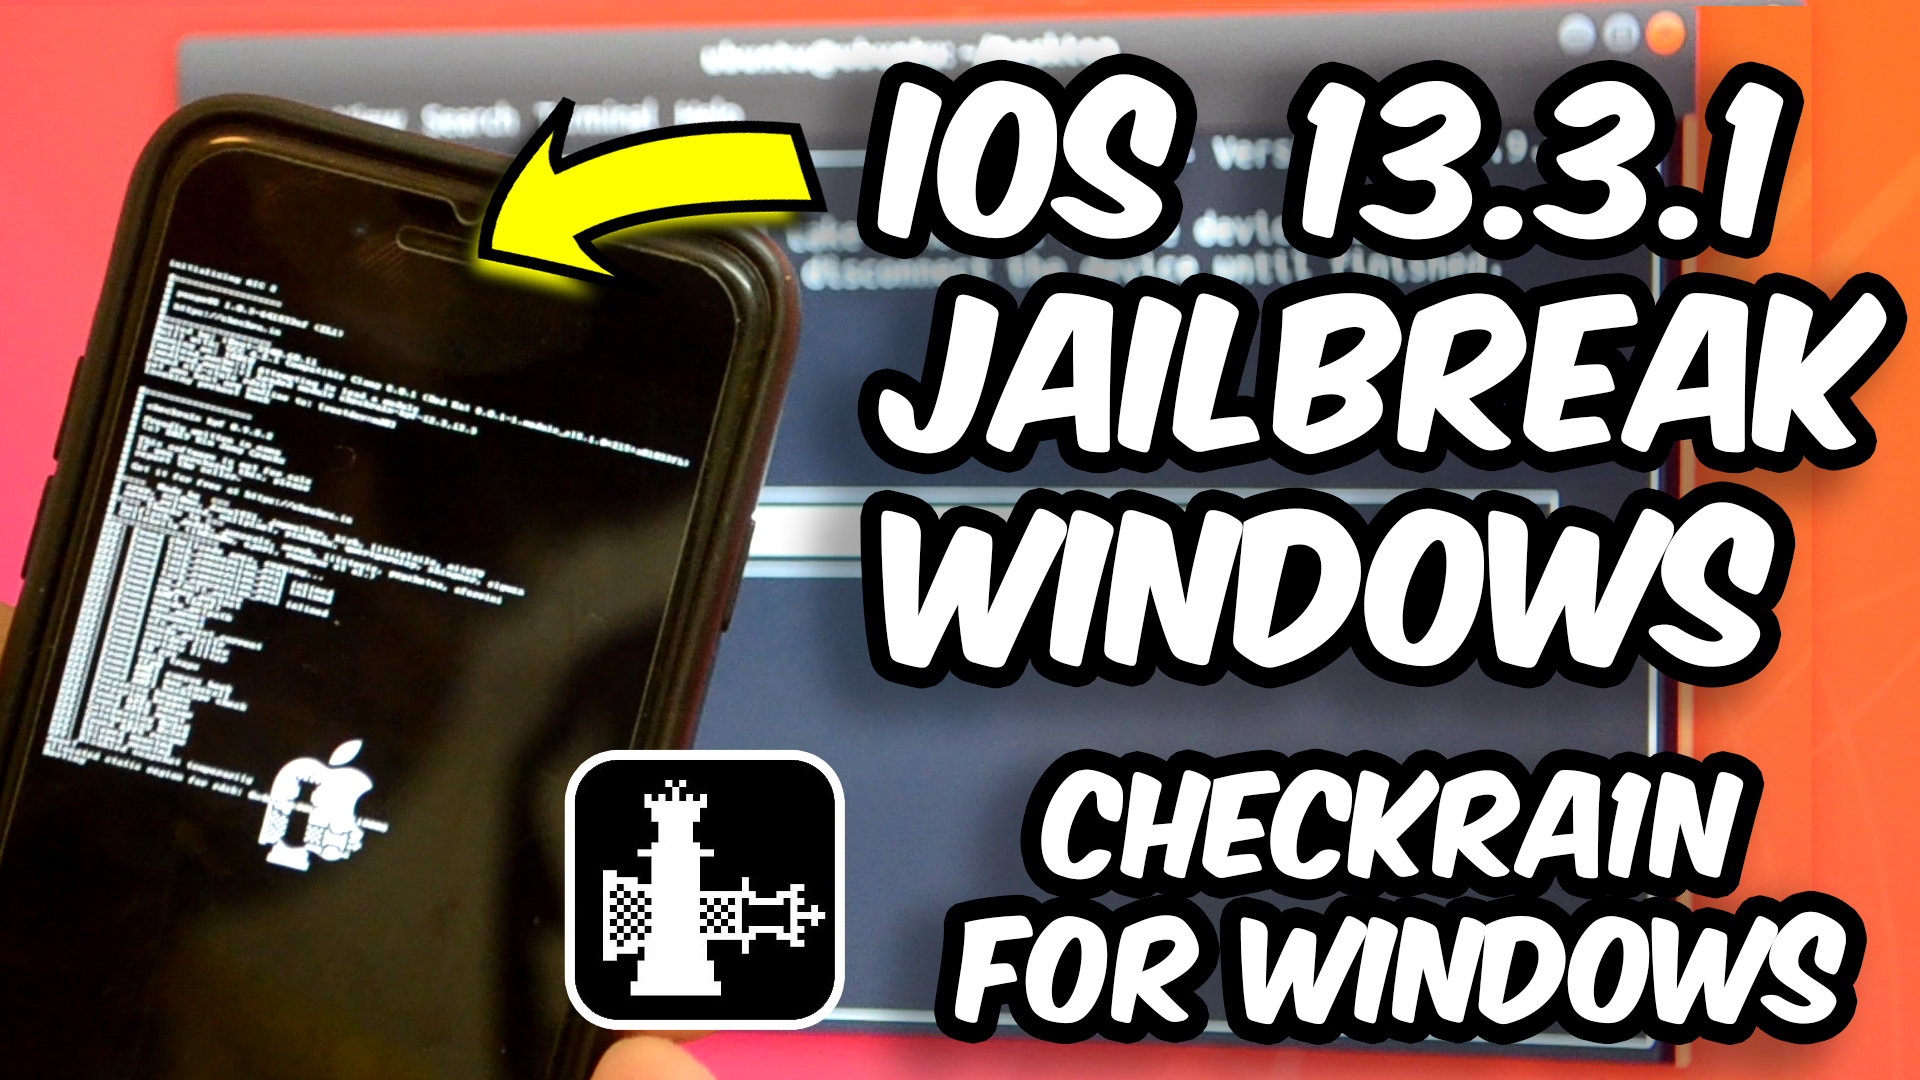 How to JAILBREAK iOS 13 3 1 Using Windows Linux Checkra1n Jailbreak 